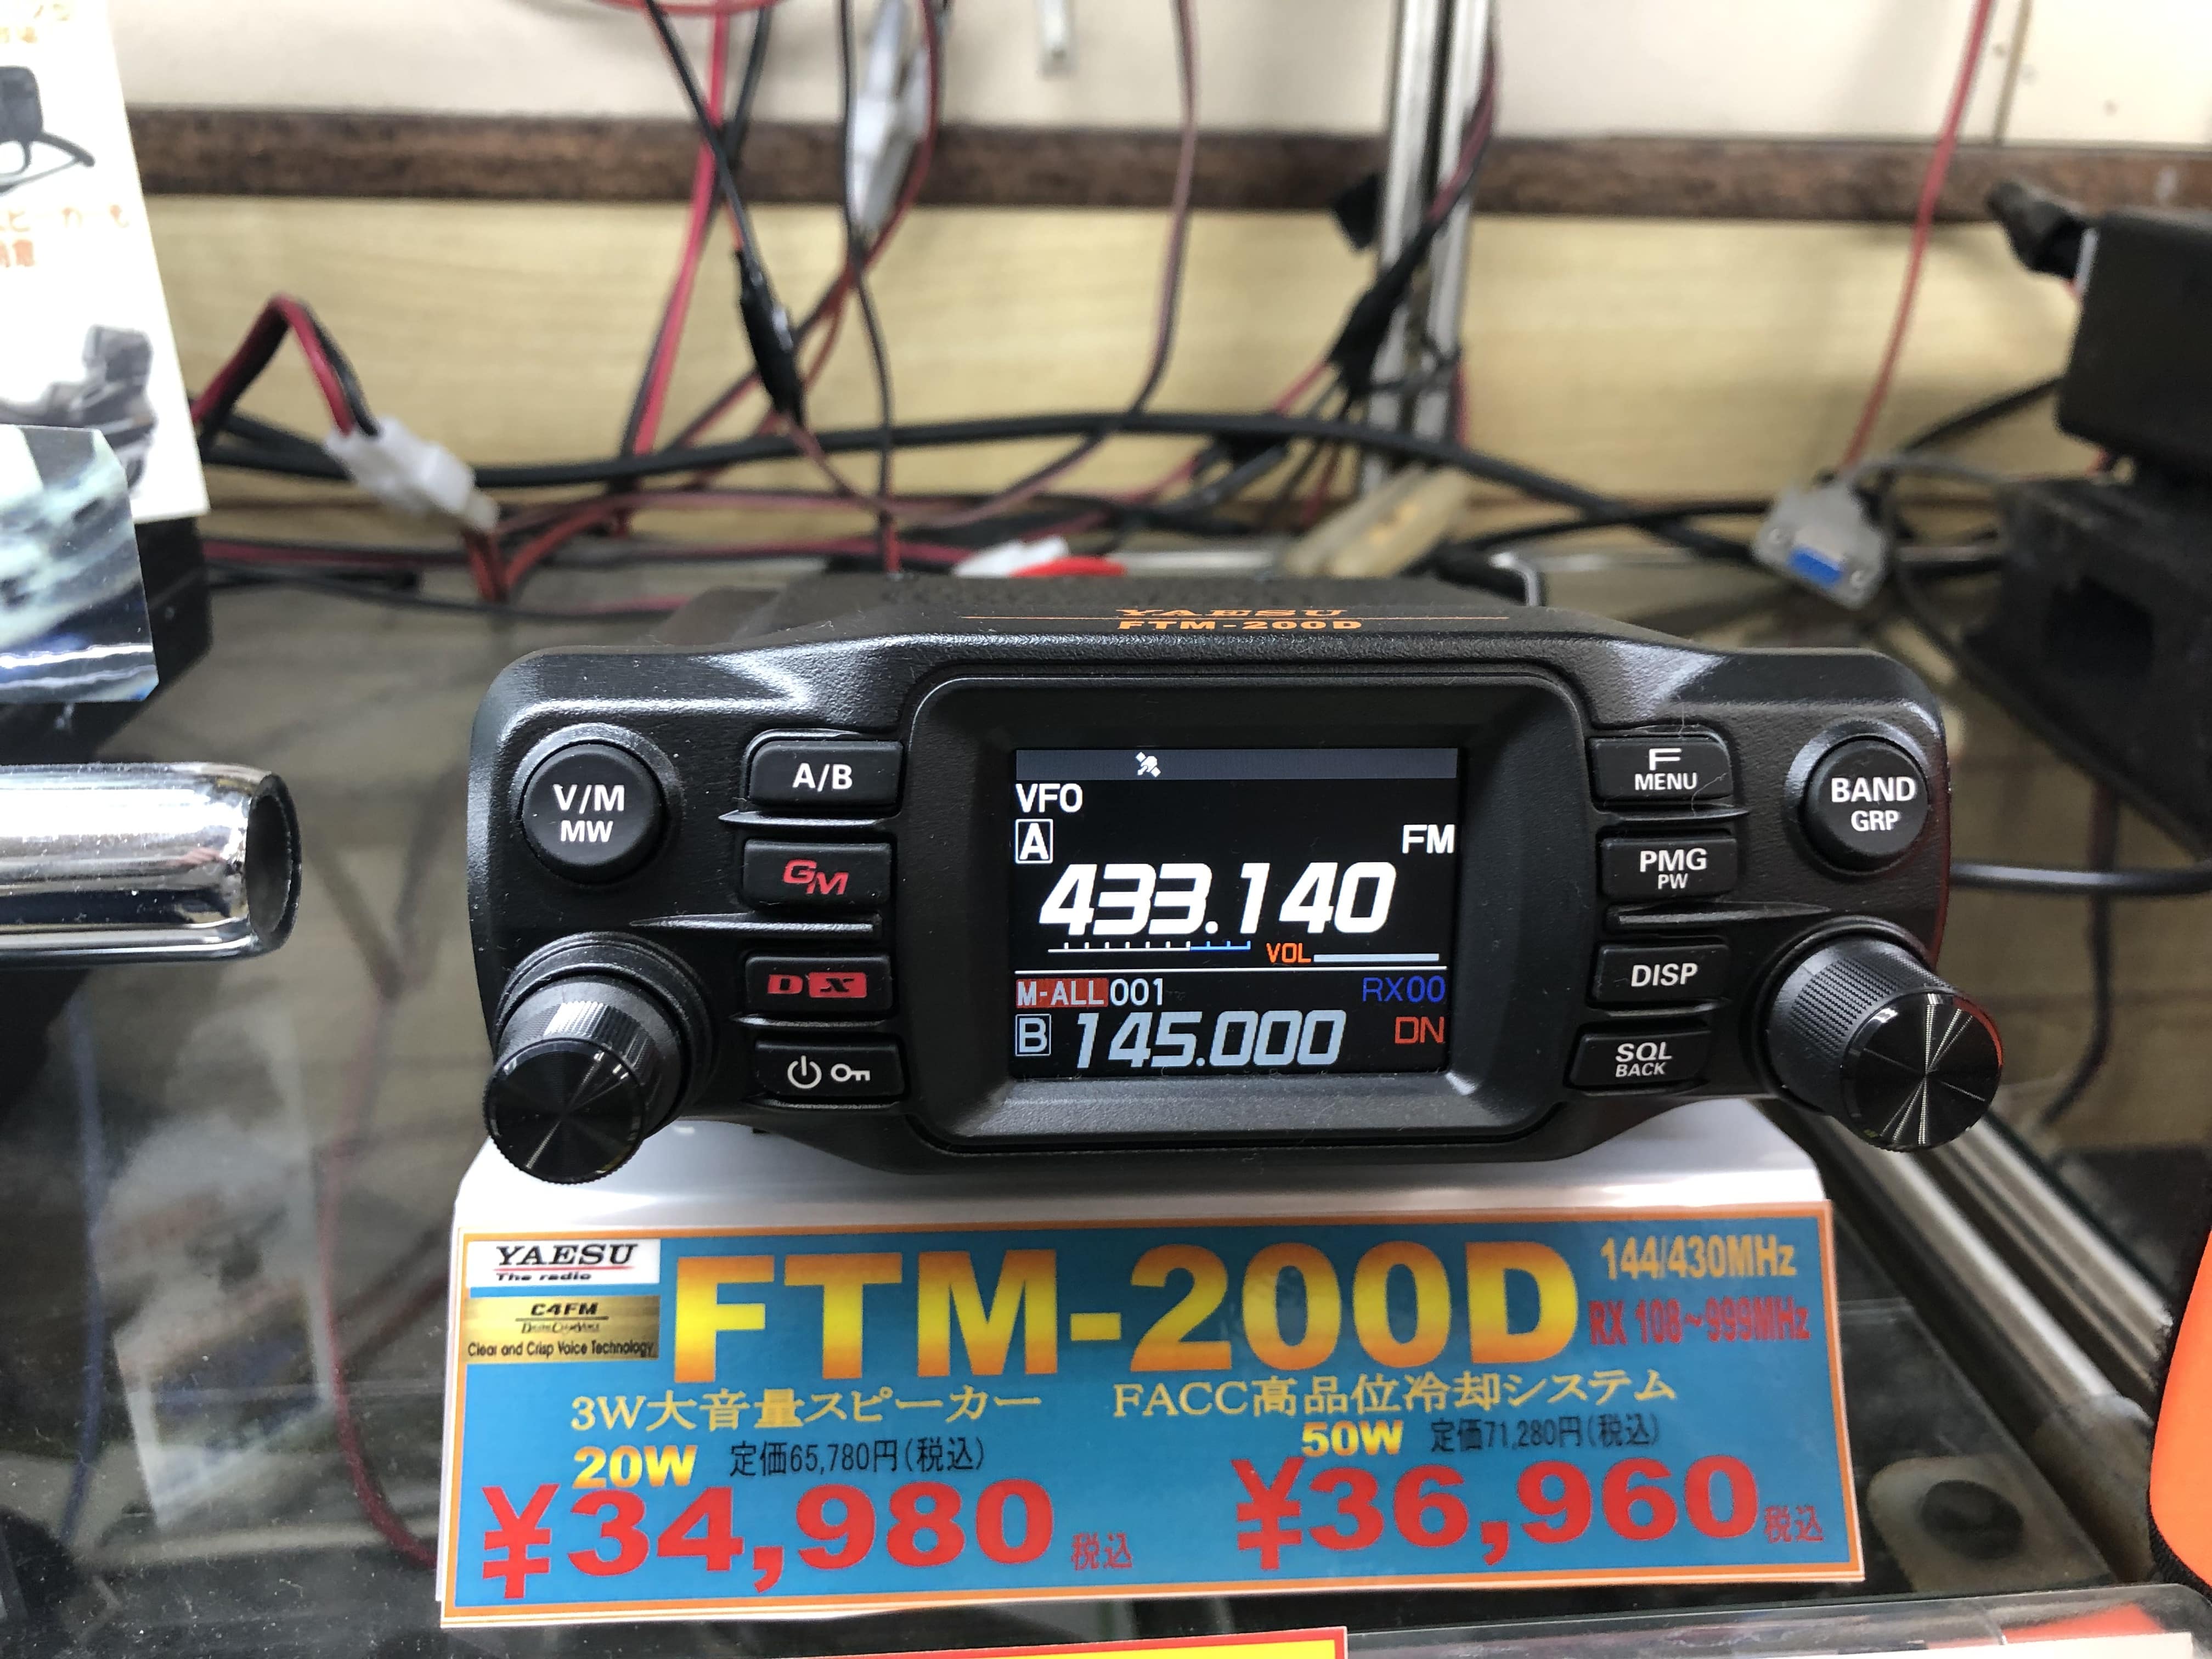 FTM-200D （50Ｗタイプ） C4FM FM 144 430MHz デュアルバンドデジタルトランシーバー - 3